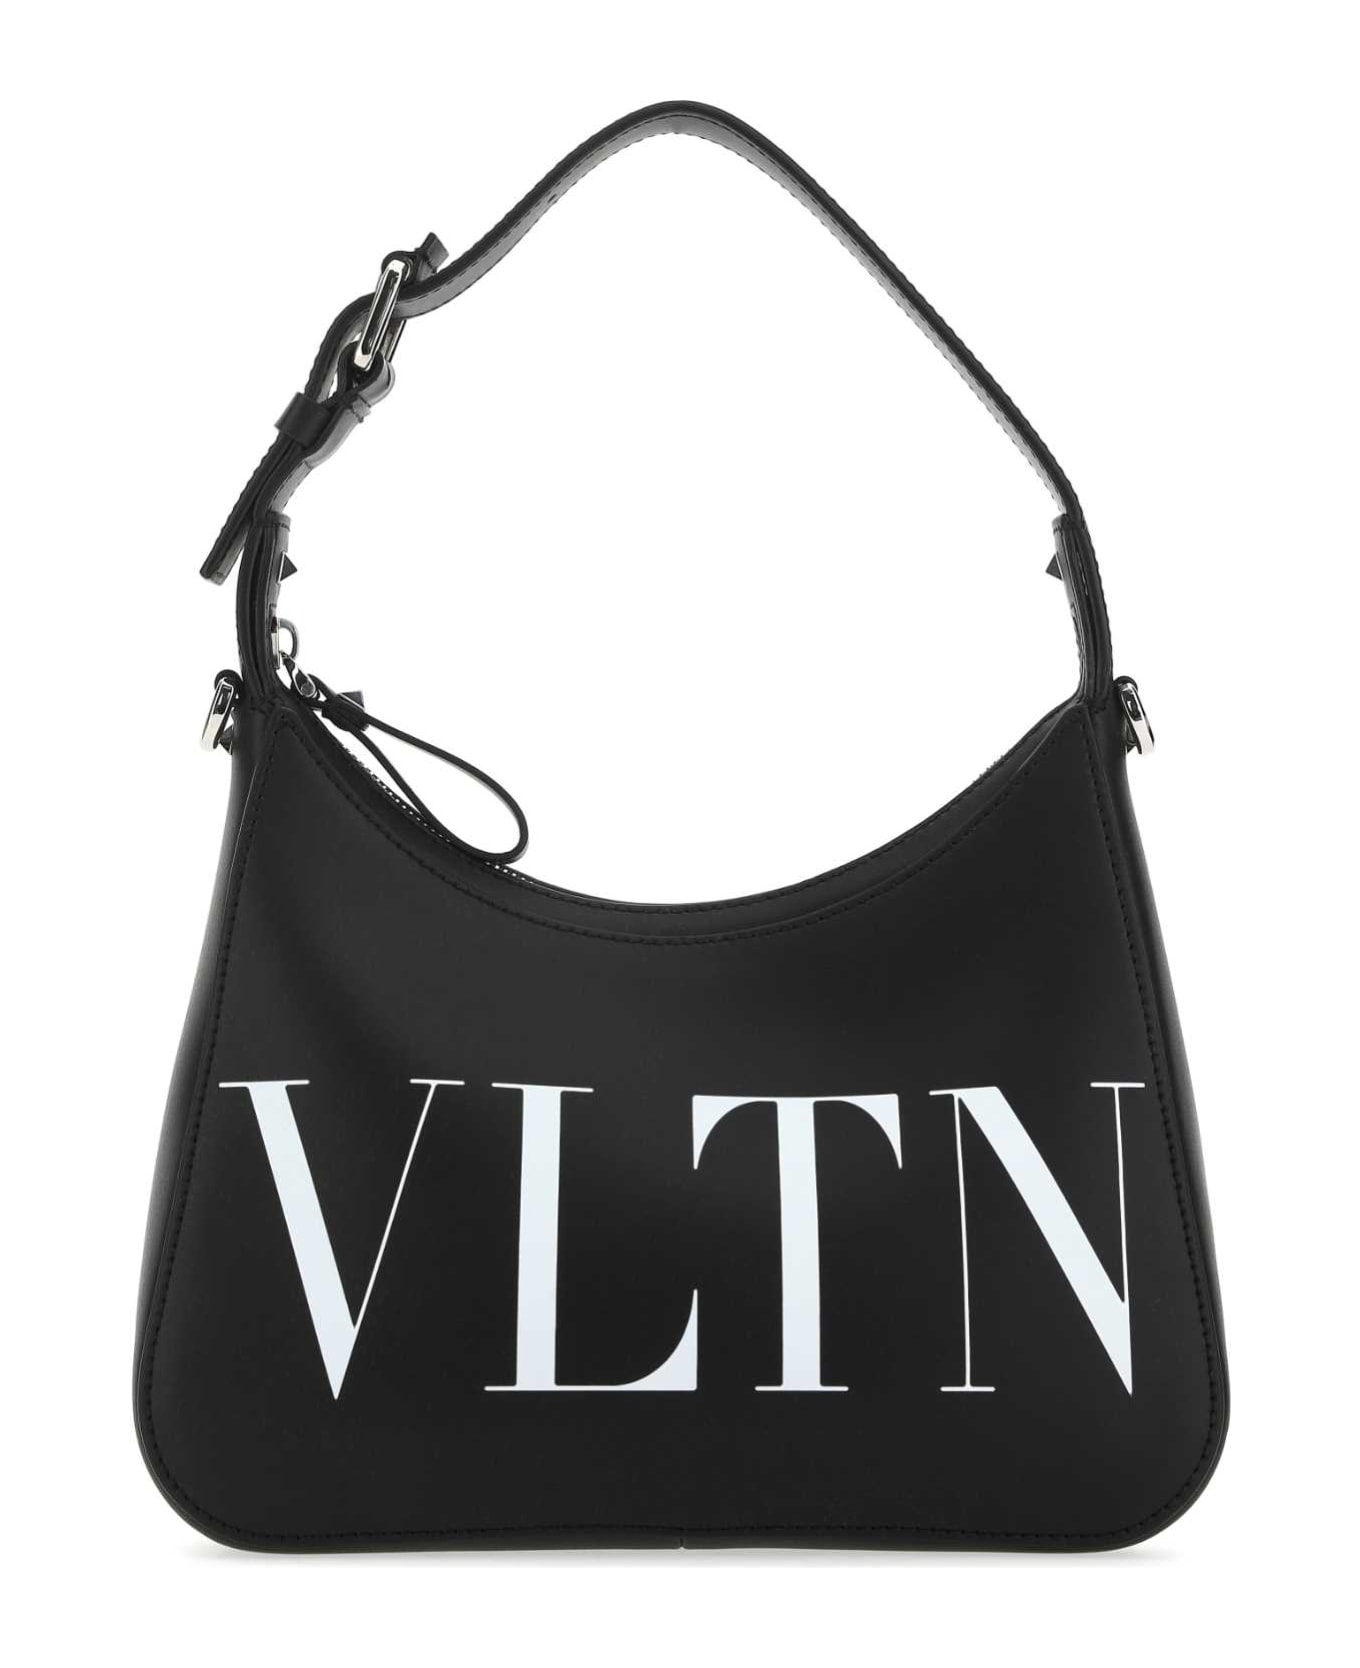 Valentino Garavani Black Leather Vltn Handbag - 0NI トートバッグ